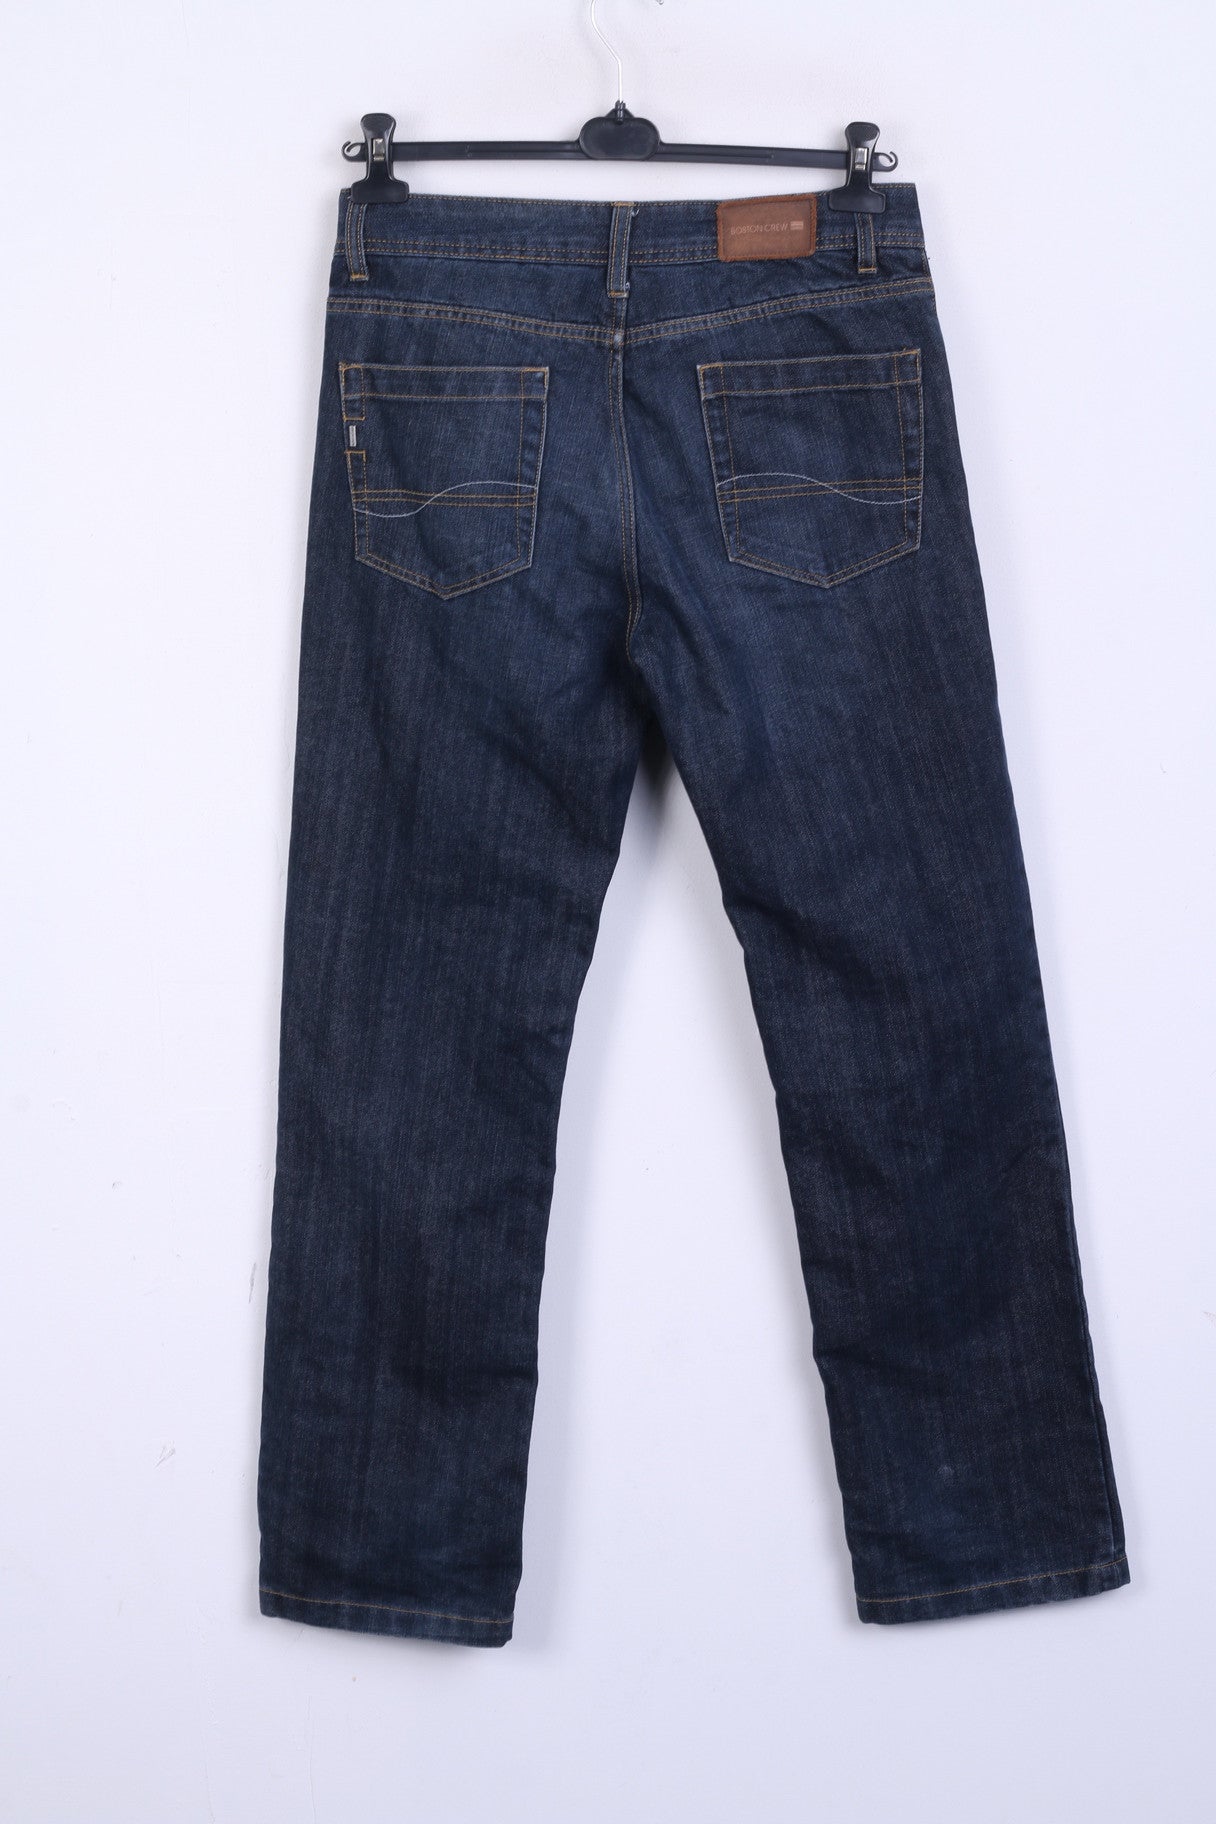 BOSTON CREW Mens W32 L31 Jeans ANA Pants Trousers Navy Cotton Straight Leg Fit